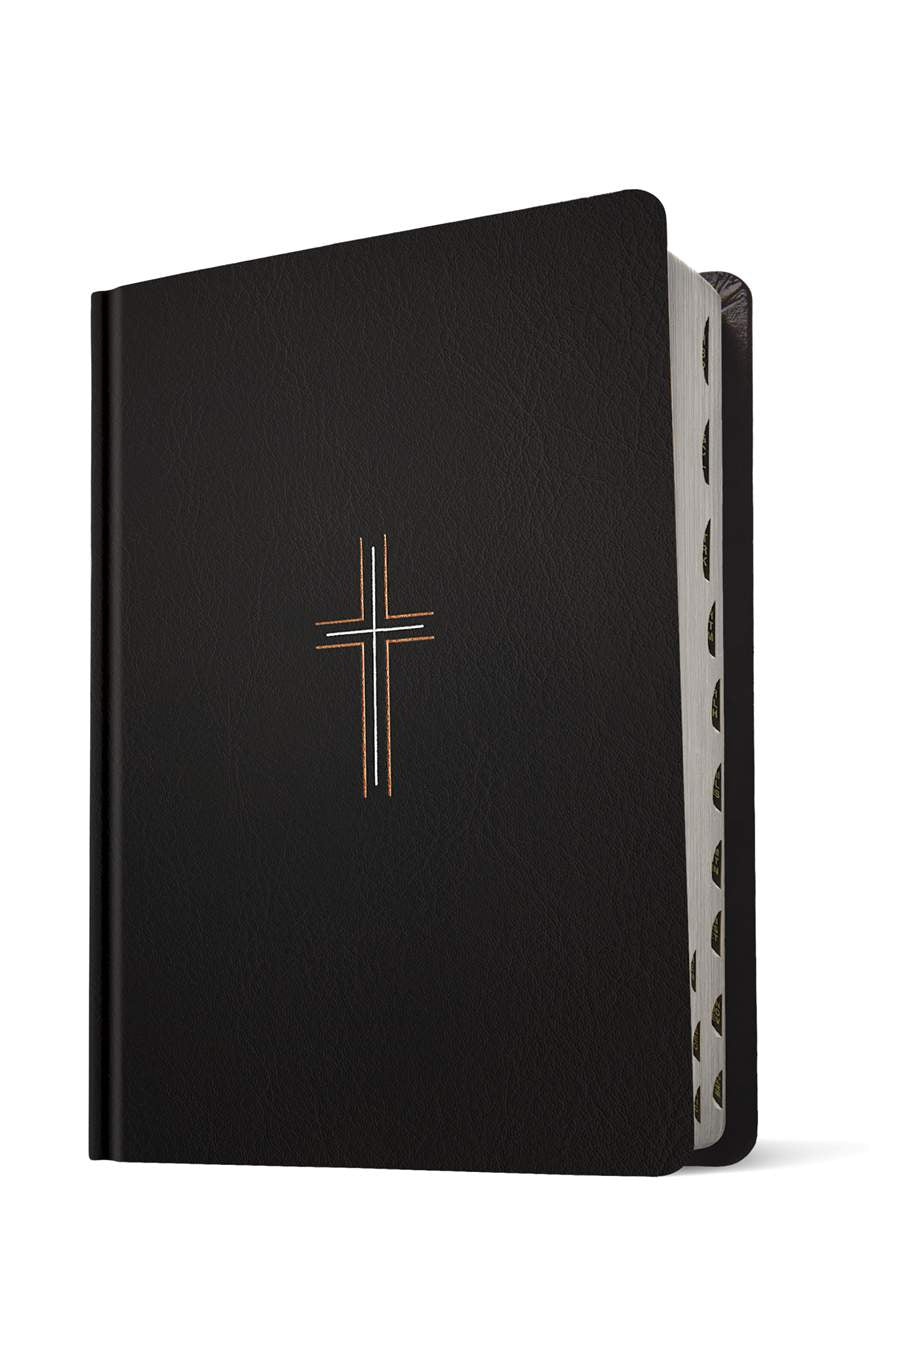 NLT Wide Margin Bible, Filament Enabled Edition